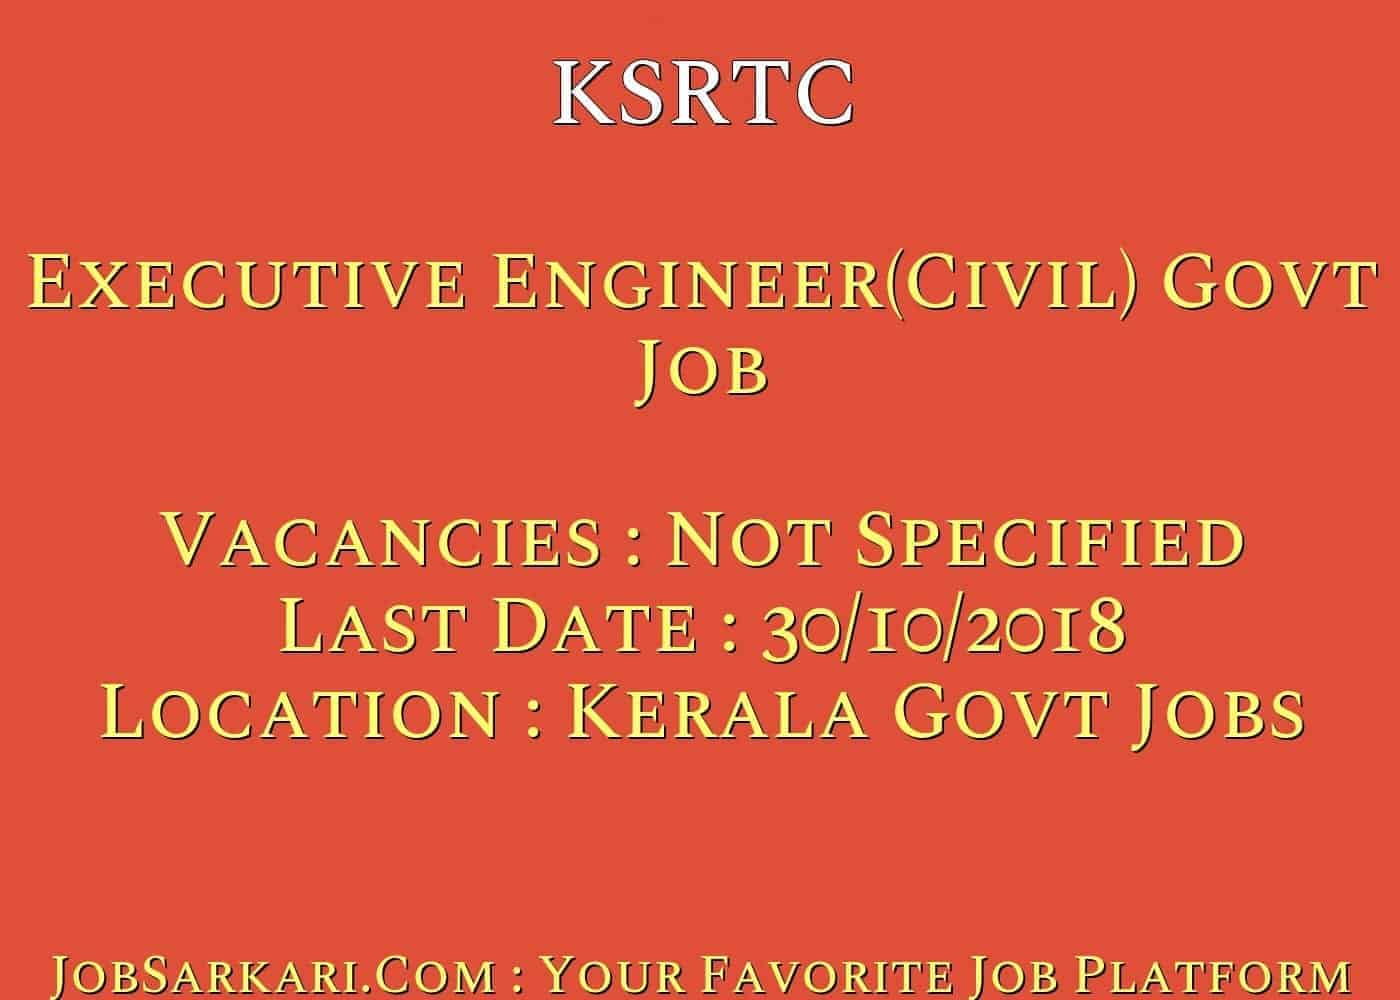 KSRTC Recruitment 2018 for Executive Engineer(Civil) Govt Job